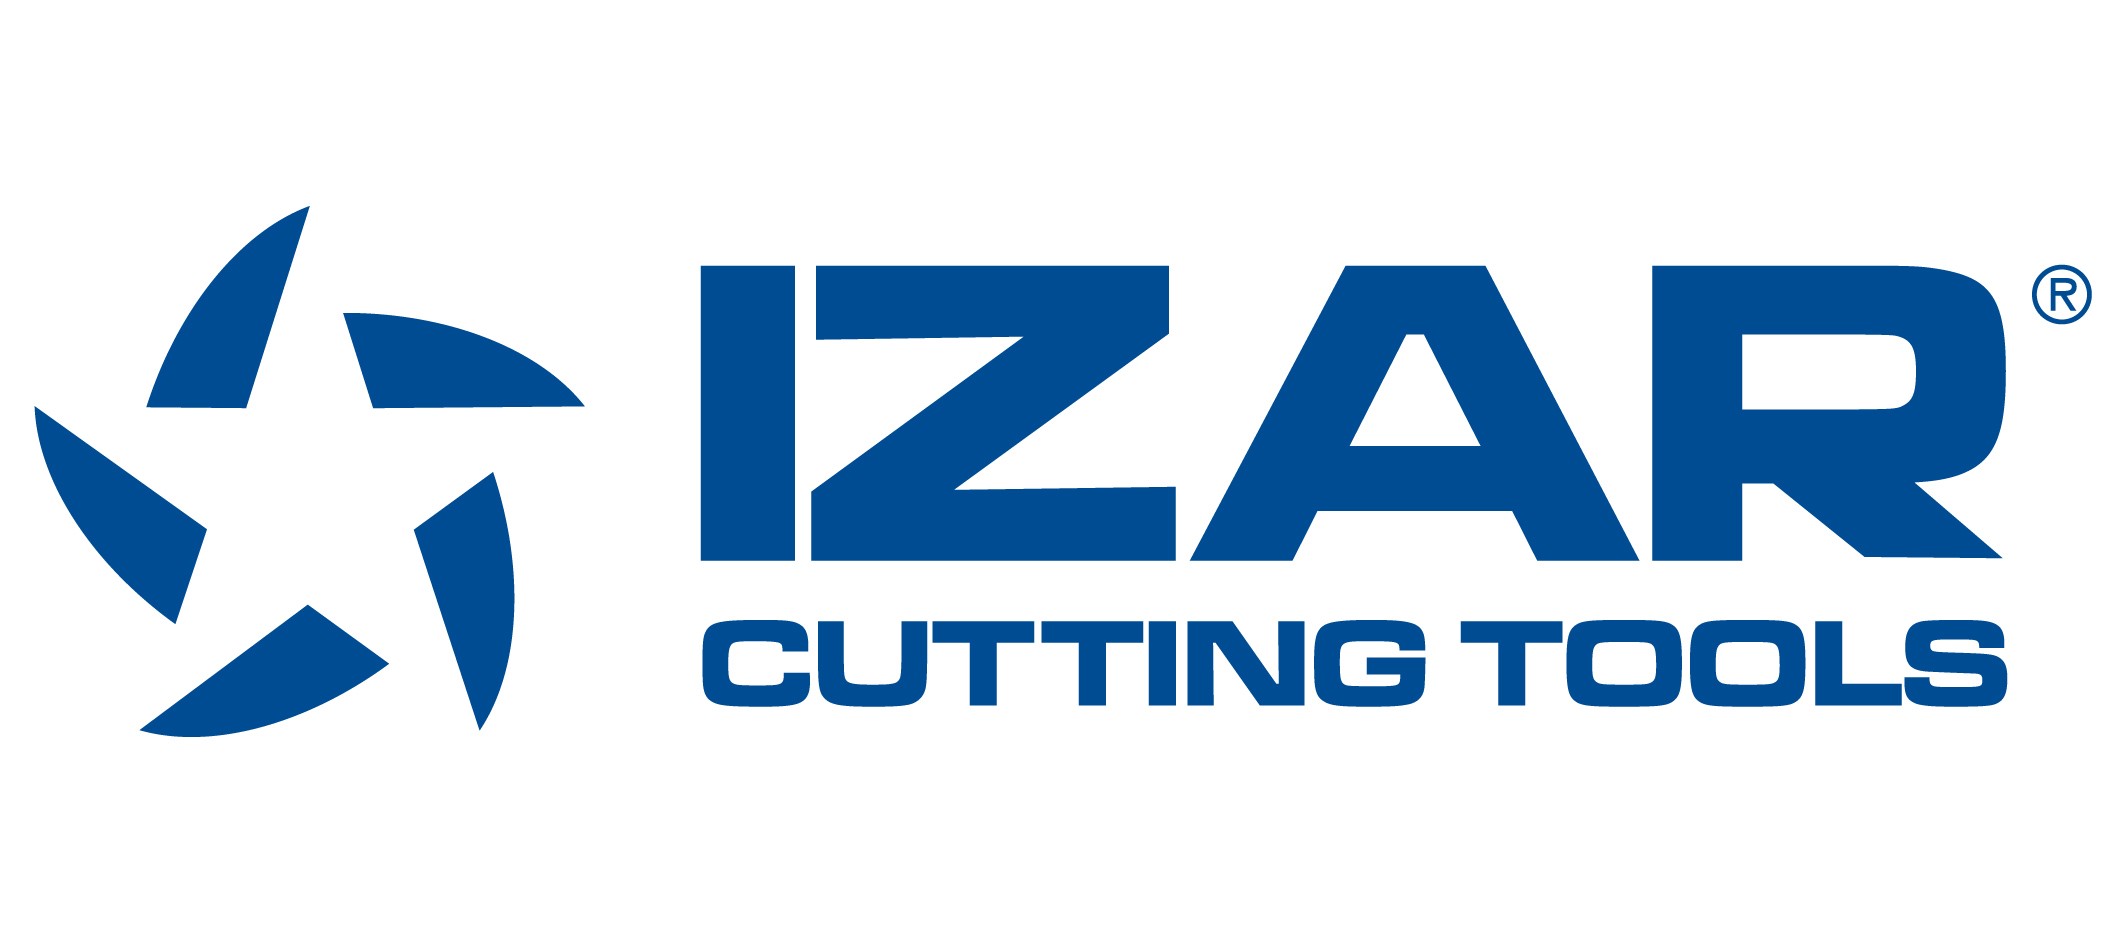 Logo Izar